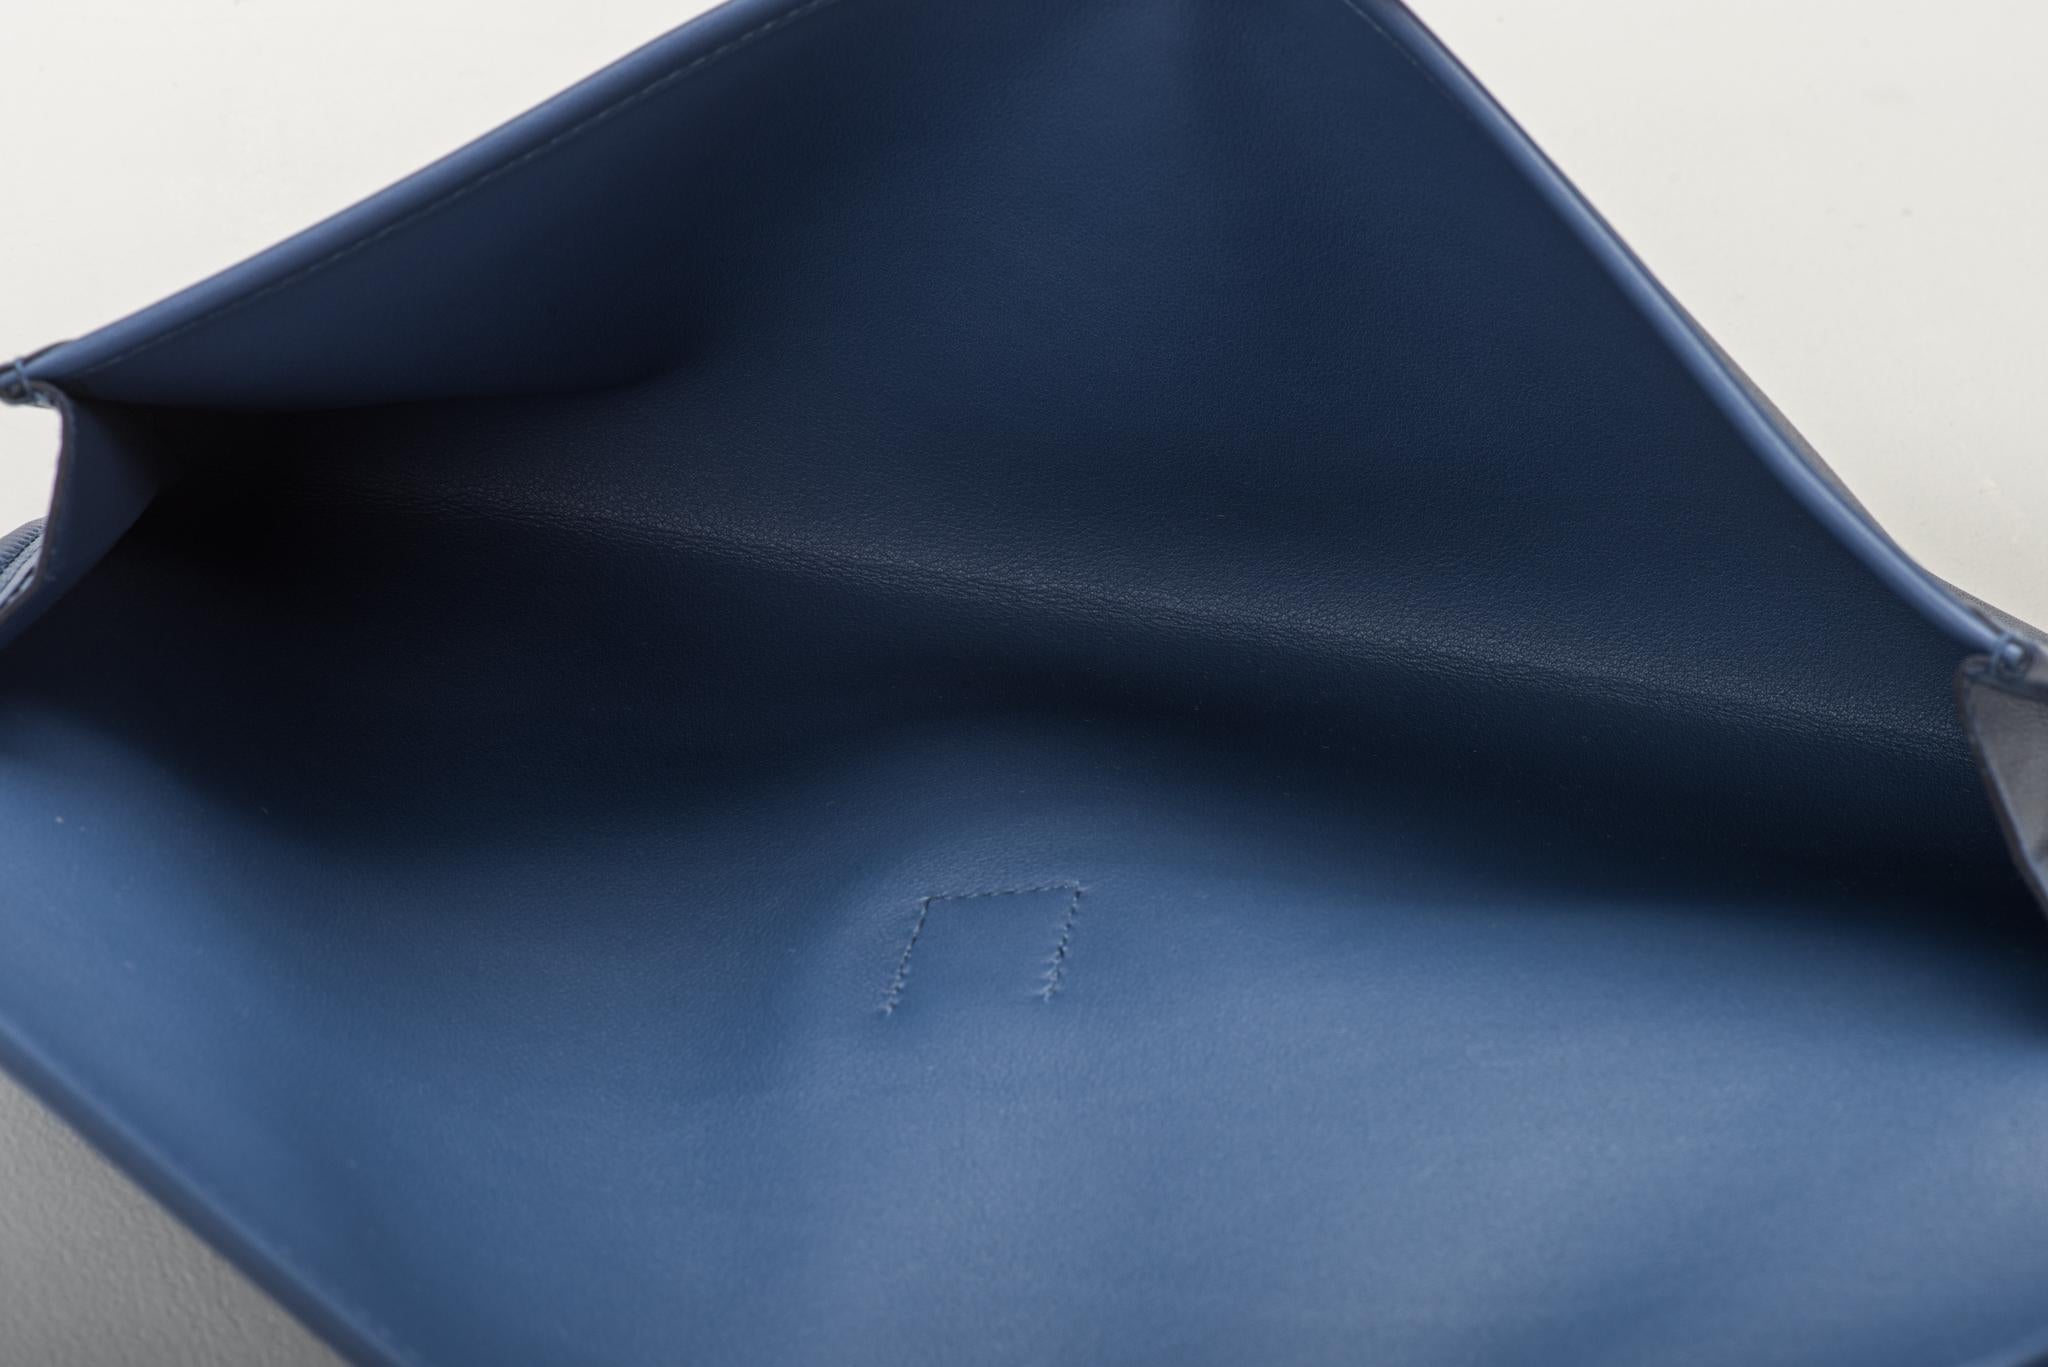 Hermès jig elan 29cm blue brighton in swift leather. Dated 